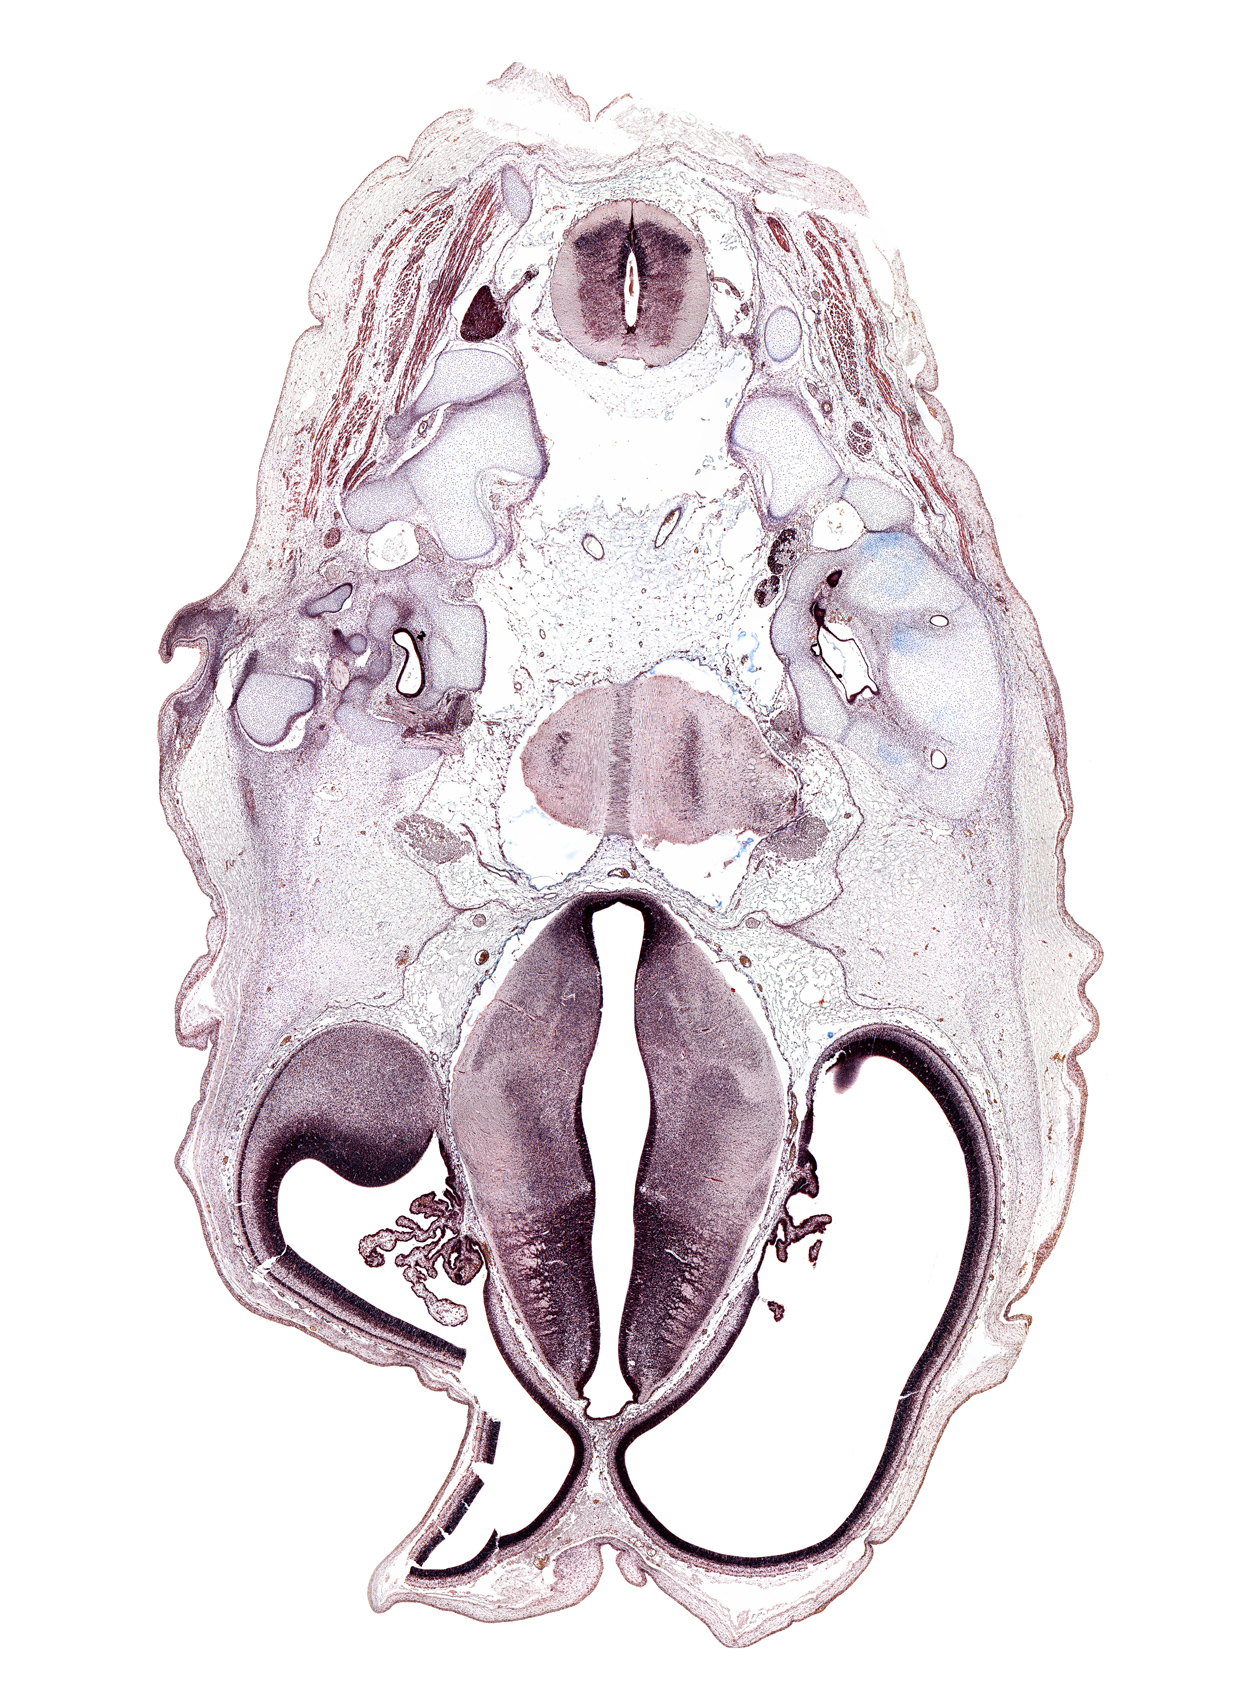 anterior semicircular duct, artifact space(s), artifact(s), atlanto-occipital joint, choroid plexus, decussation, facial nerve (CN VII), foramen magnum region, glossopharyngeal nerve (CN IX), internal jugular vein, lateral semicircular duct, obliquus capitis superior muscle, posterior arch of C-1 vertebra (atlas), roof plate of diencephalon, spinal accessory nerve (CN XI), subarachnoid space, sulcus dorsalis, transverse process of C-1 vertebra (atlas), utricle, vagus nerve (CN X), vertebral artery